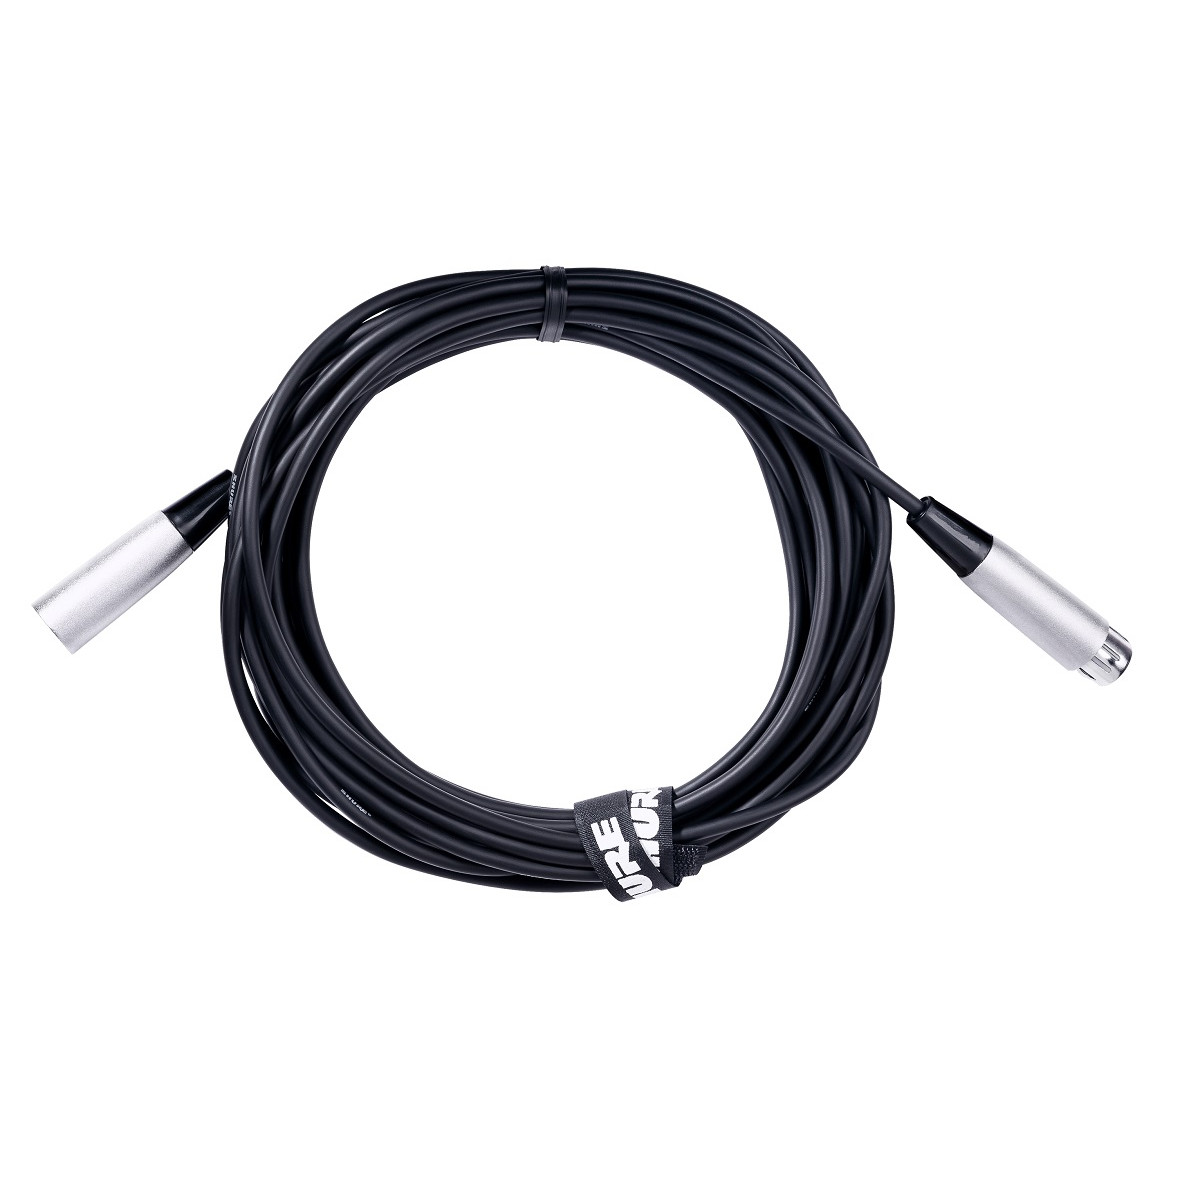 Cable de micro Triple-Flex Switchcraft XLR3MX/XLR3FX de 7,5m. Negro.